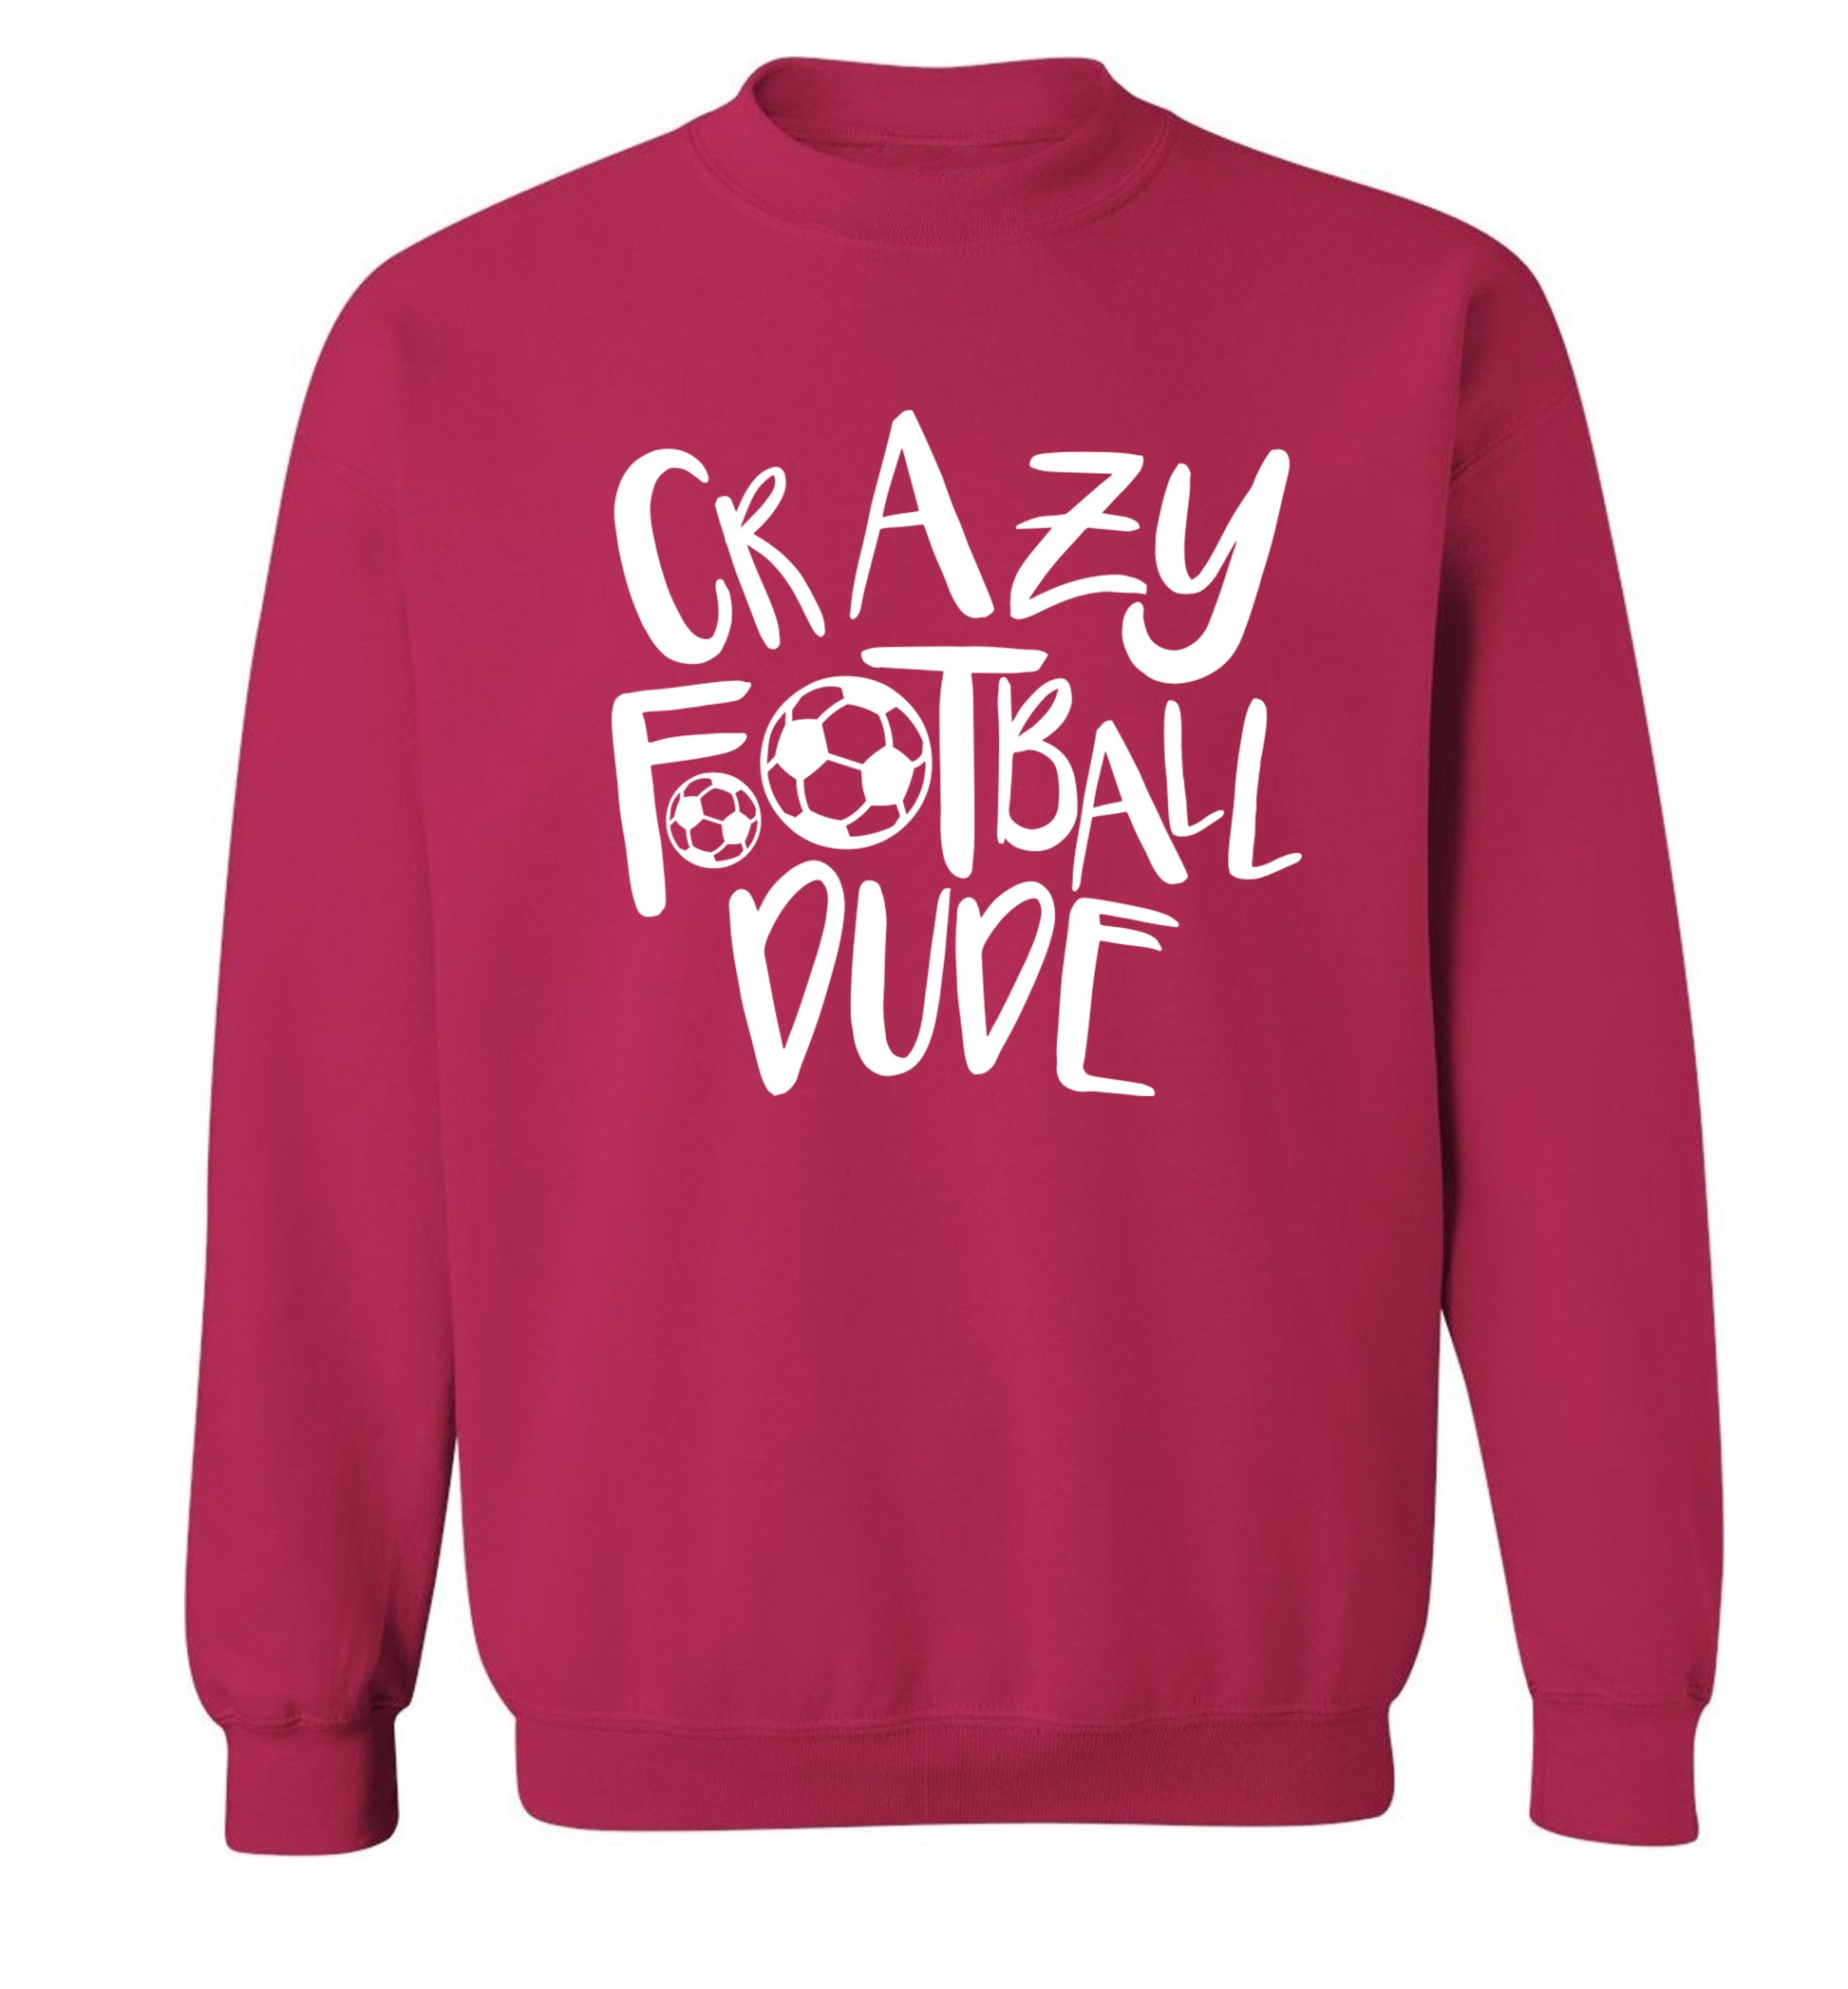 Crazy football dude Adult's unisexpink Sweater 2XL